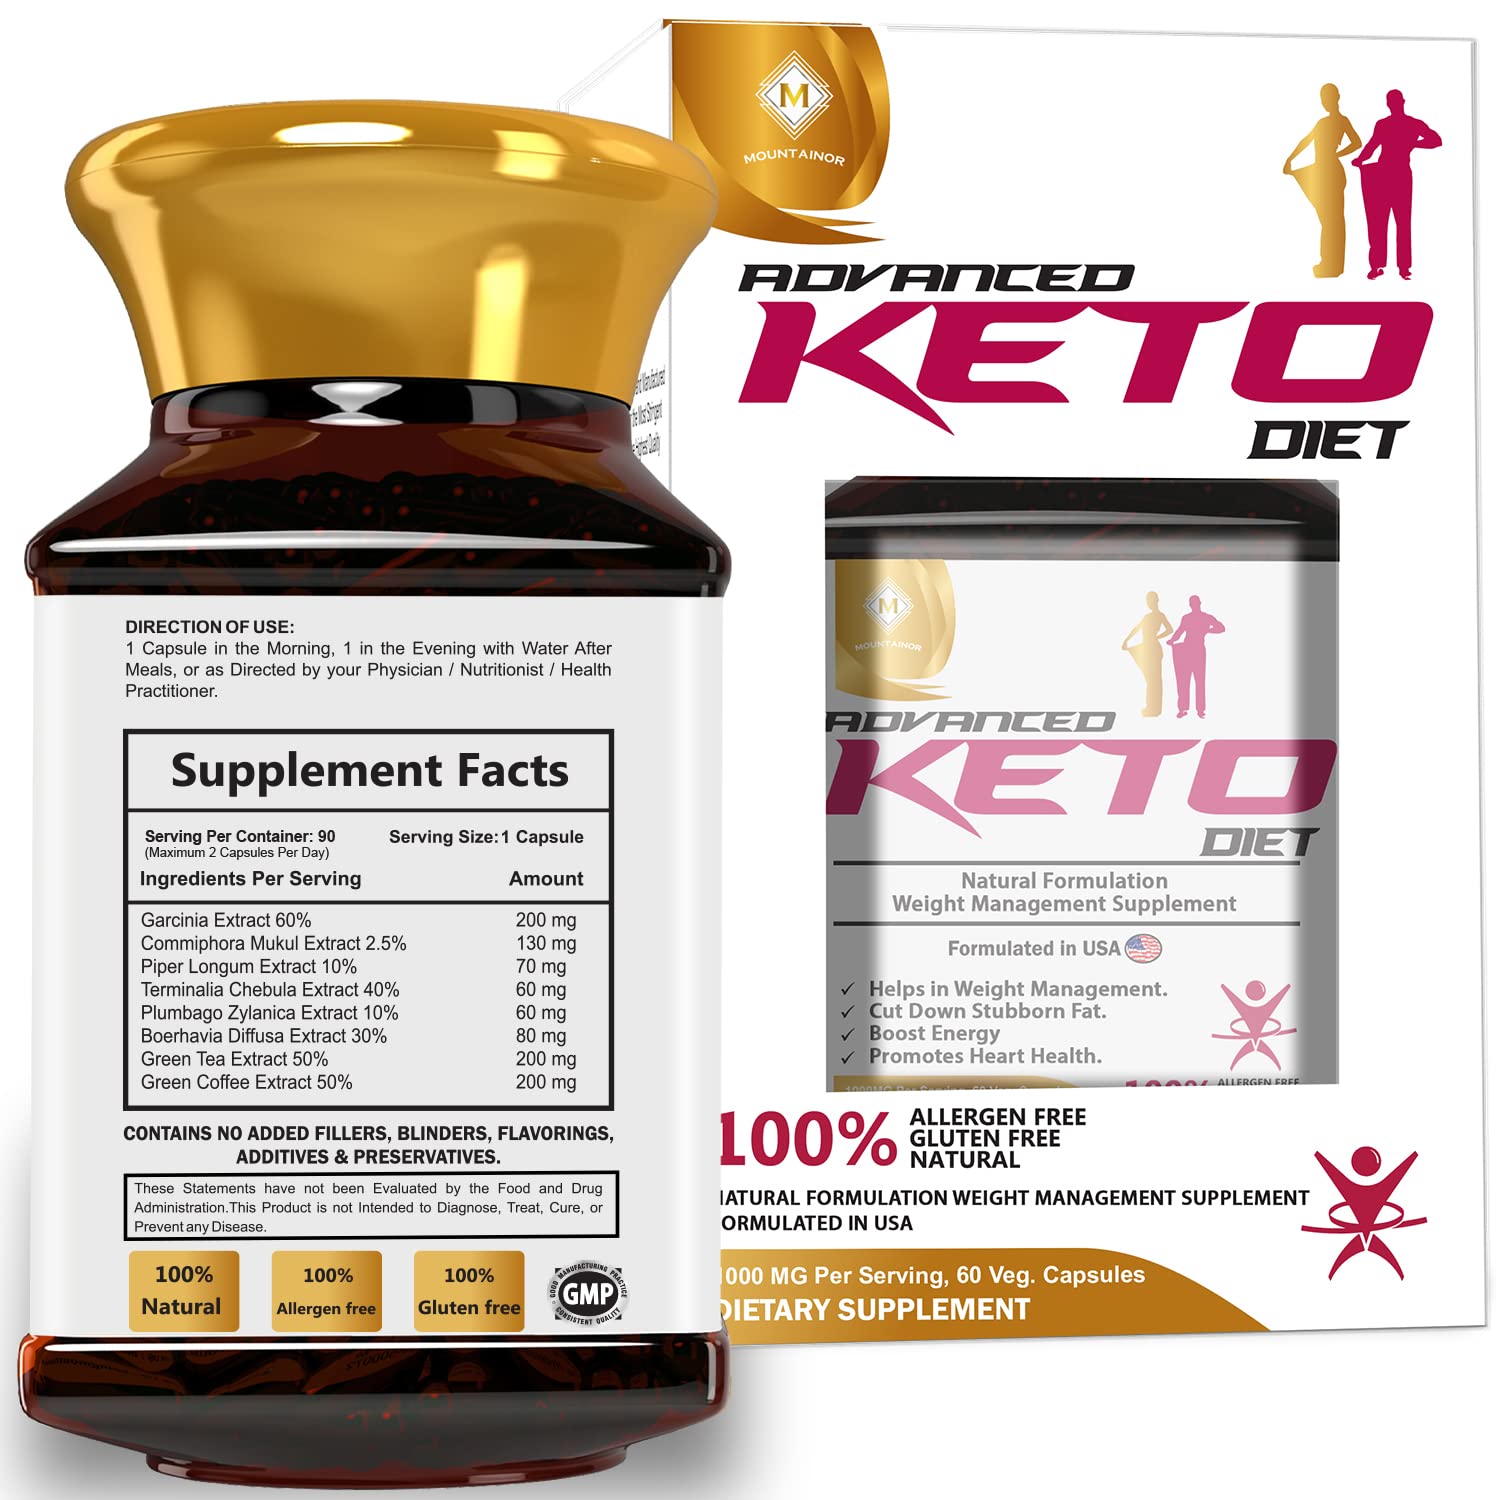 Mountainor Organic Keto Diet Weight Management Supplement Image